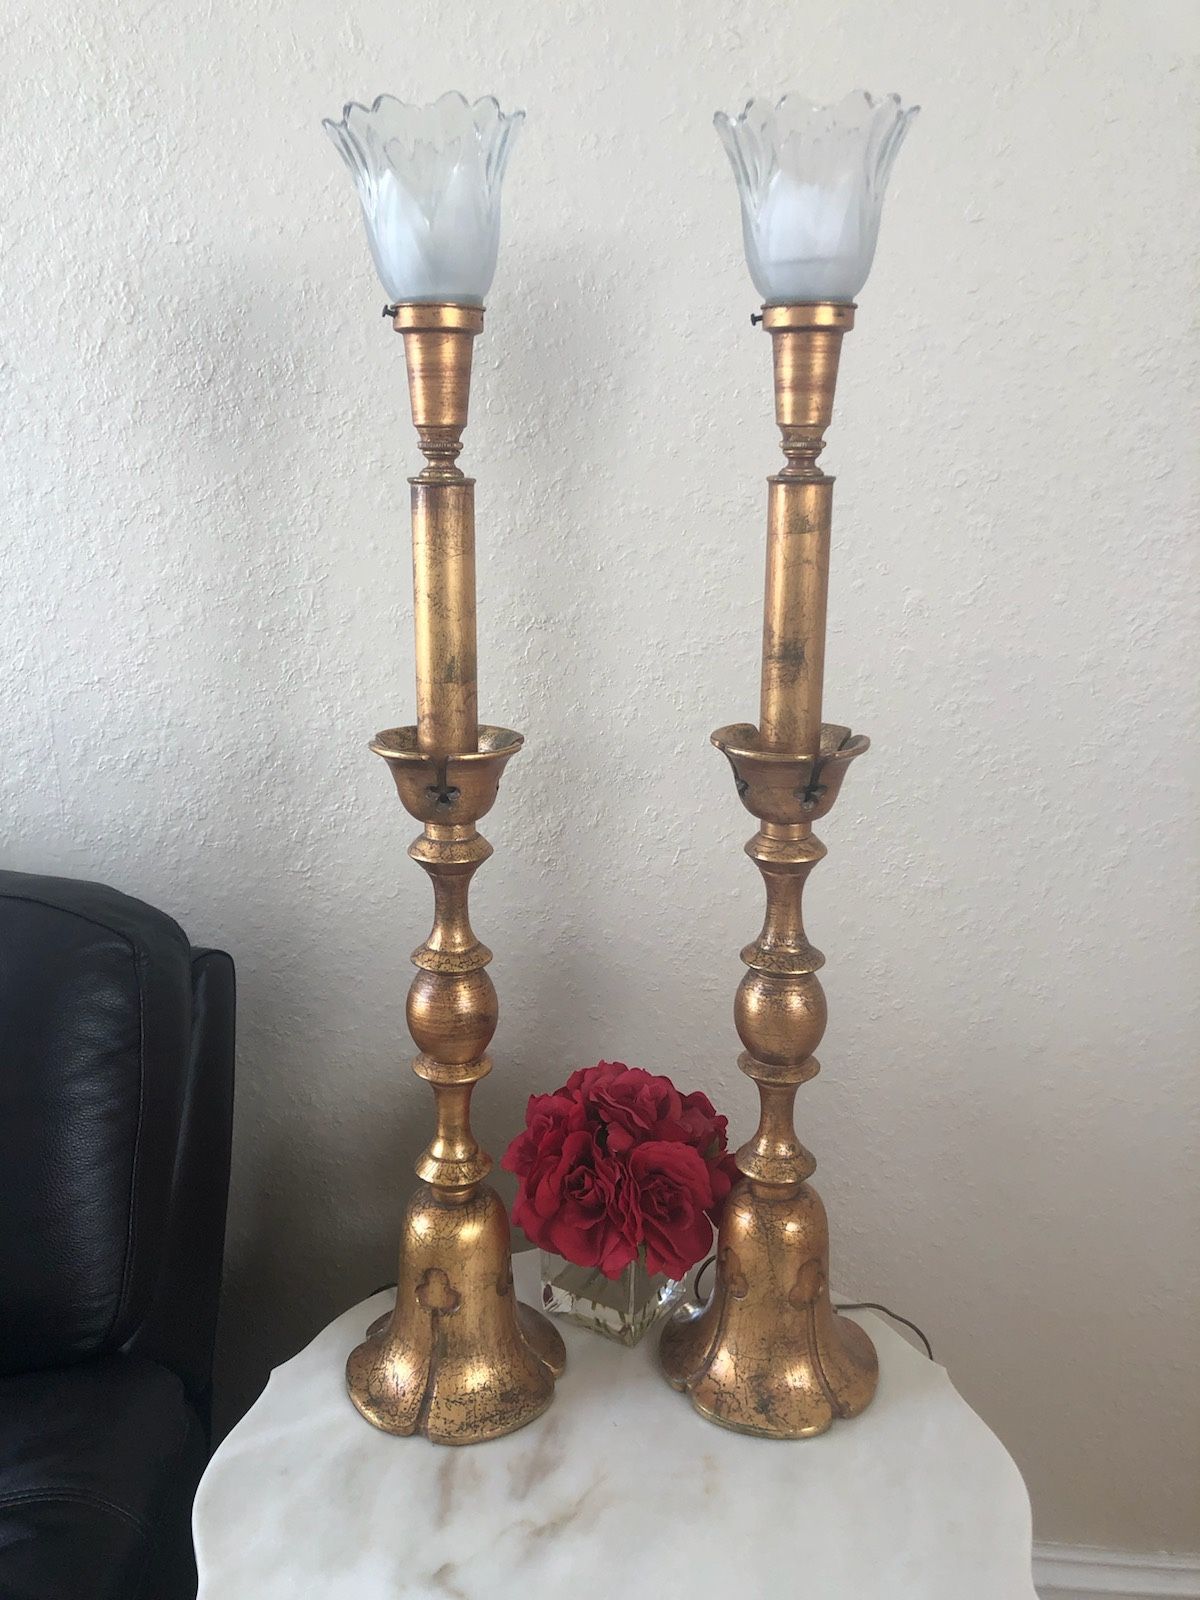 Matching Golden Rustic Antique Lamps